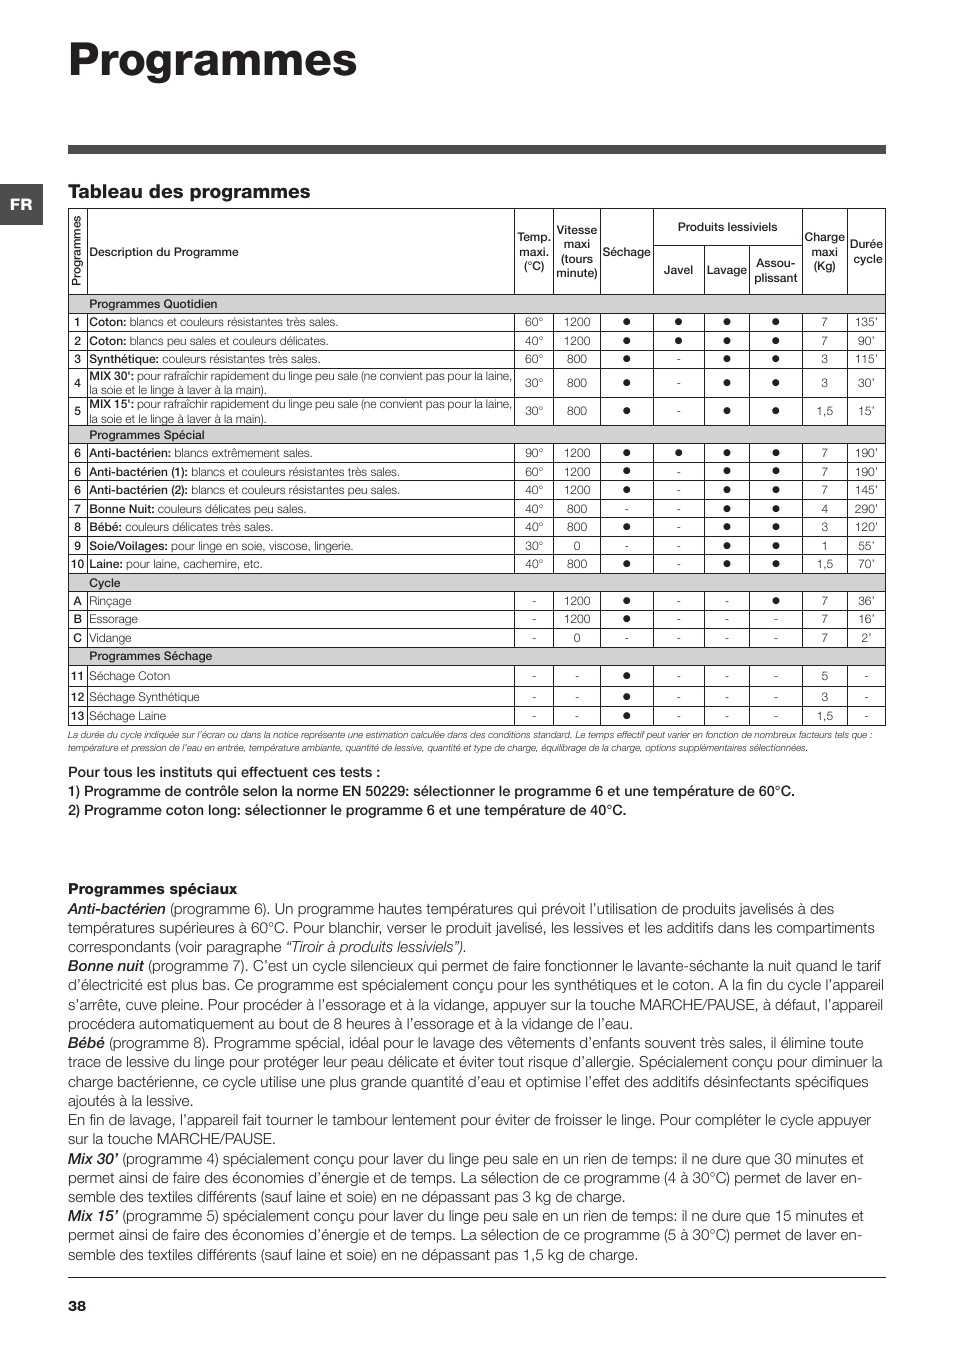 Programmes, Tableau des programmes | Hotpoint Ariston CAWD 129 EU User  Manual | Page 38 / 72 | Original mode